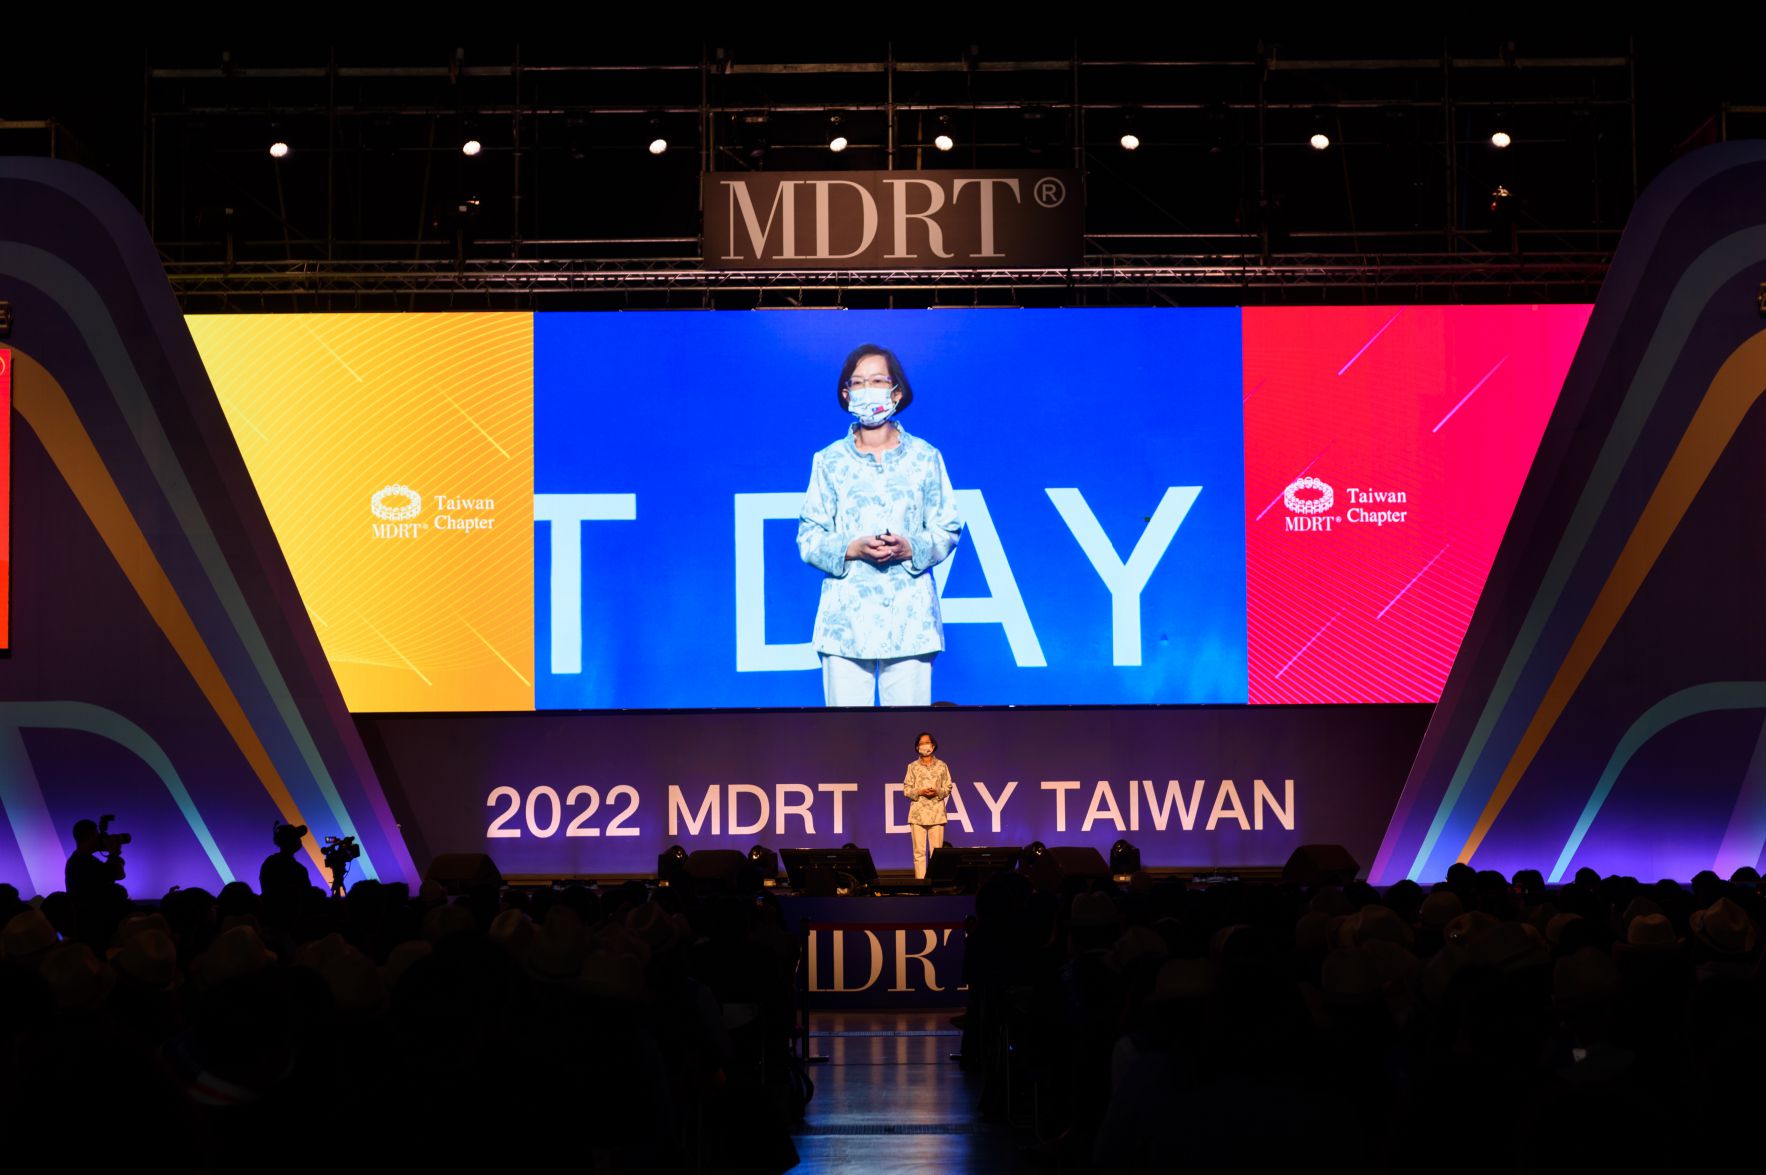 2022 MDRT DAY TAIWAN